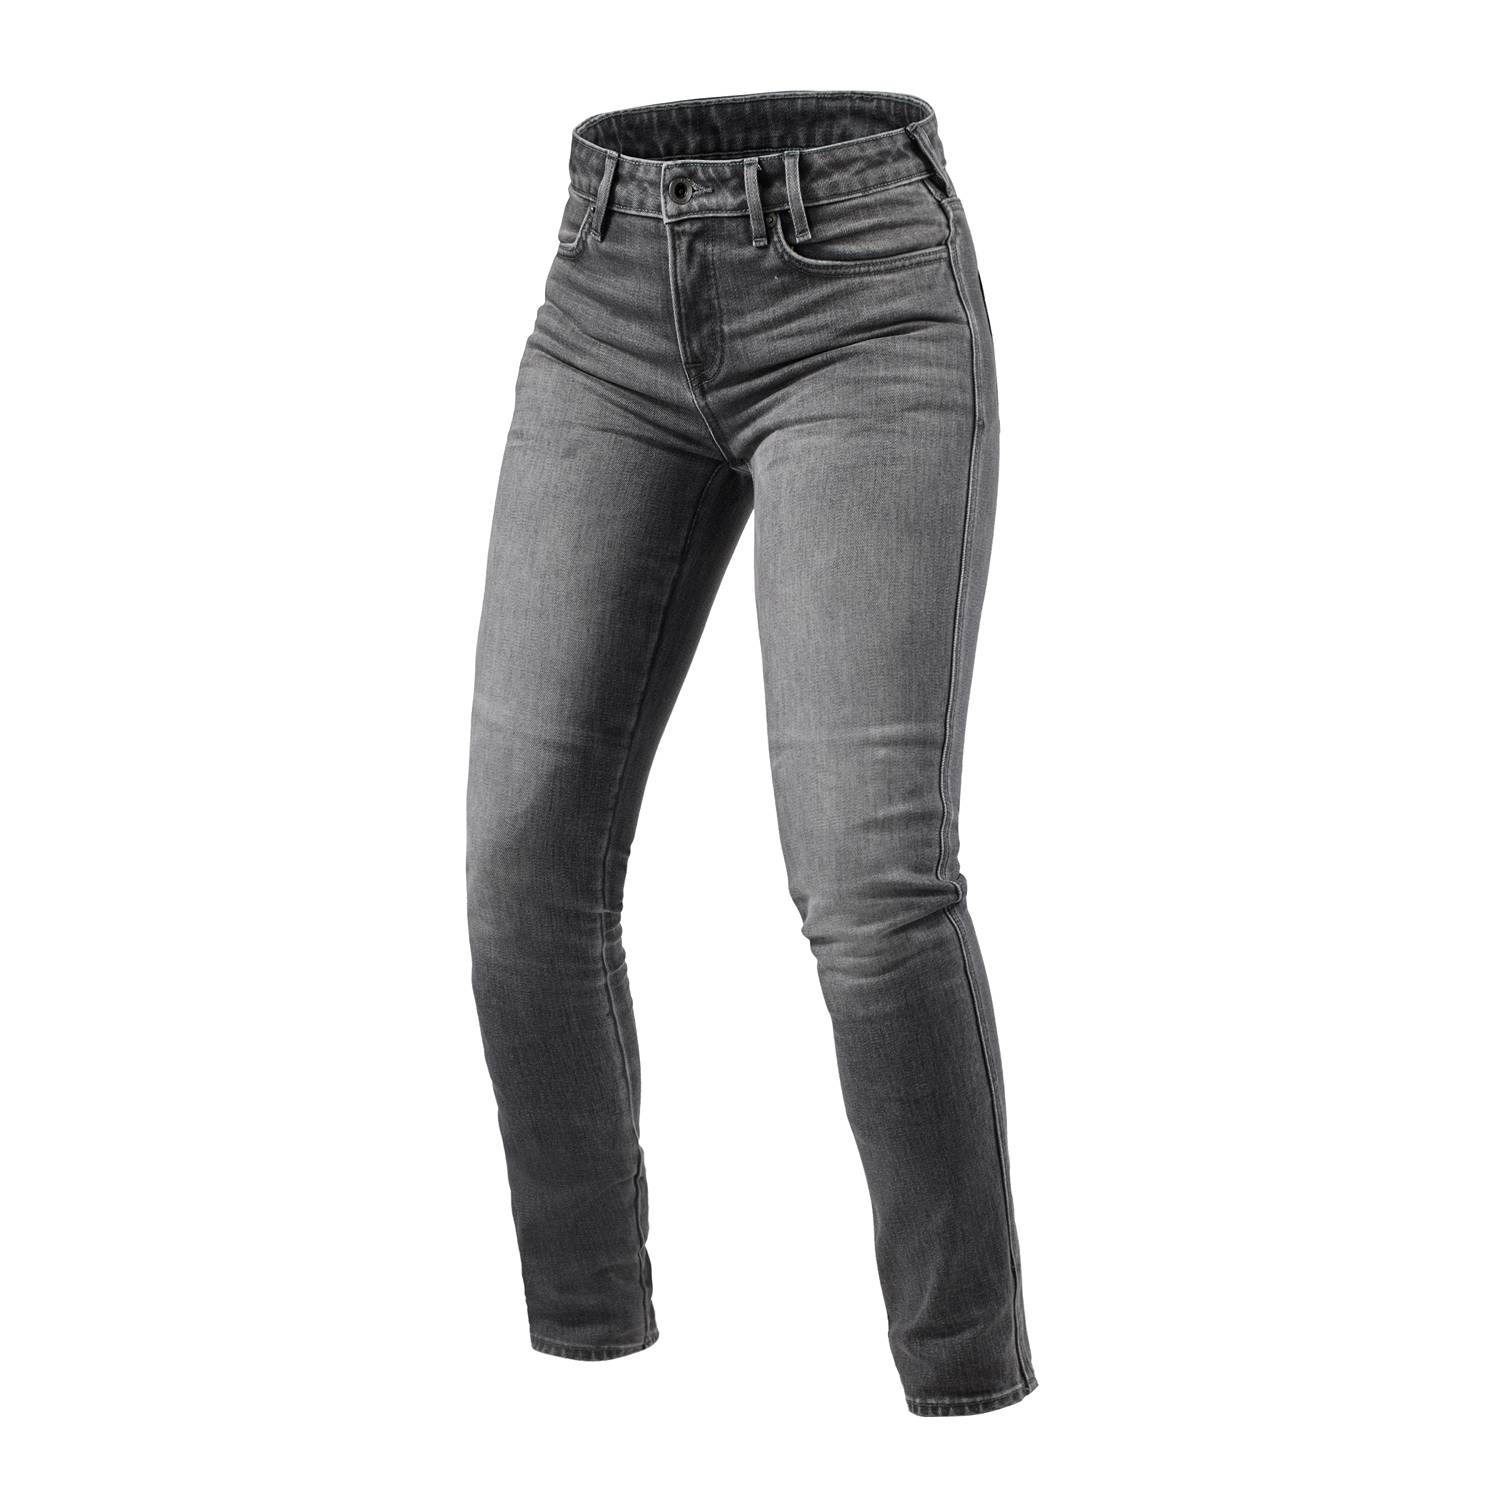 Image of REV'IT! Jeans Shelby 2 Ladies SK Medium Grey Stone L30 Size L30/W29 EN